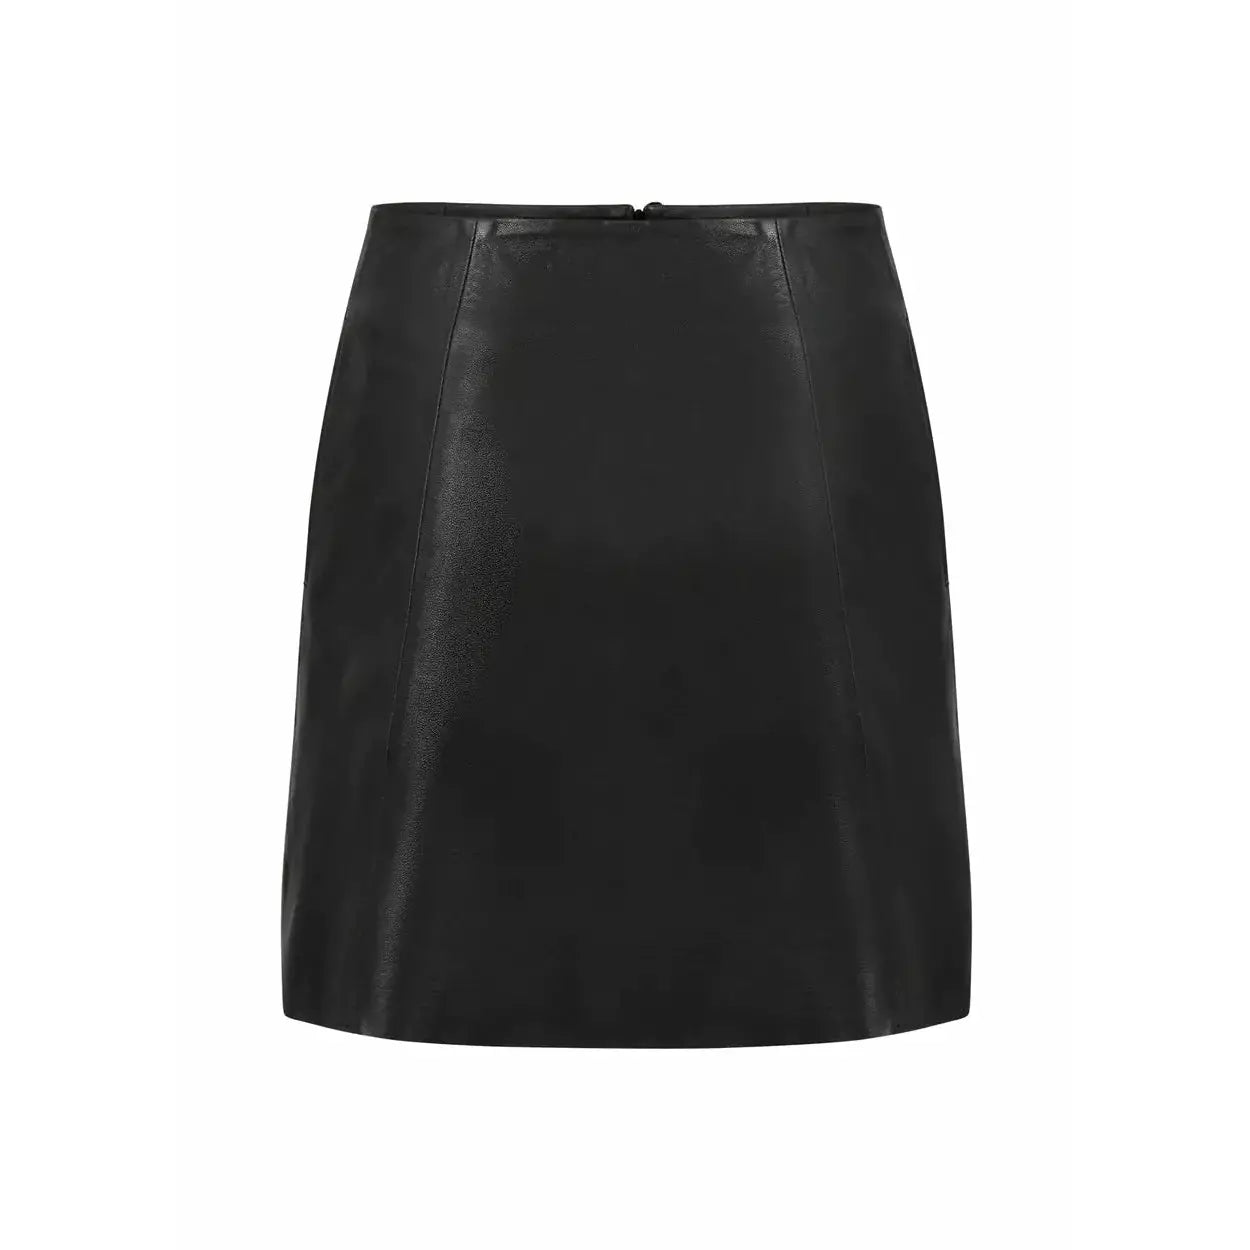 Coster Copenhagen Ladies Short A-Line Leather Skirt - Black